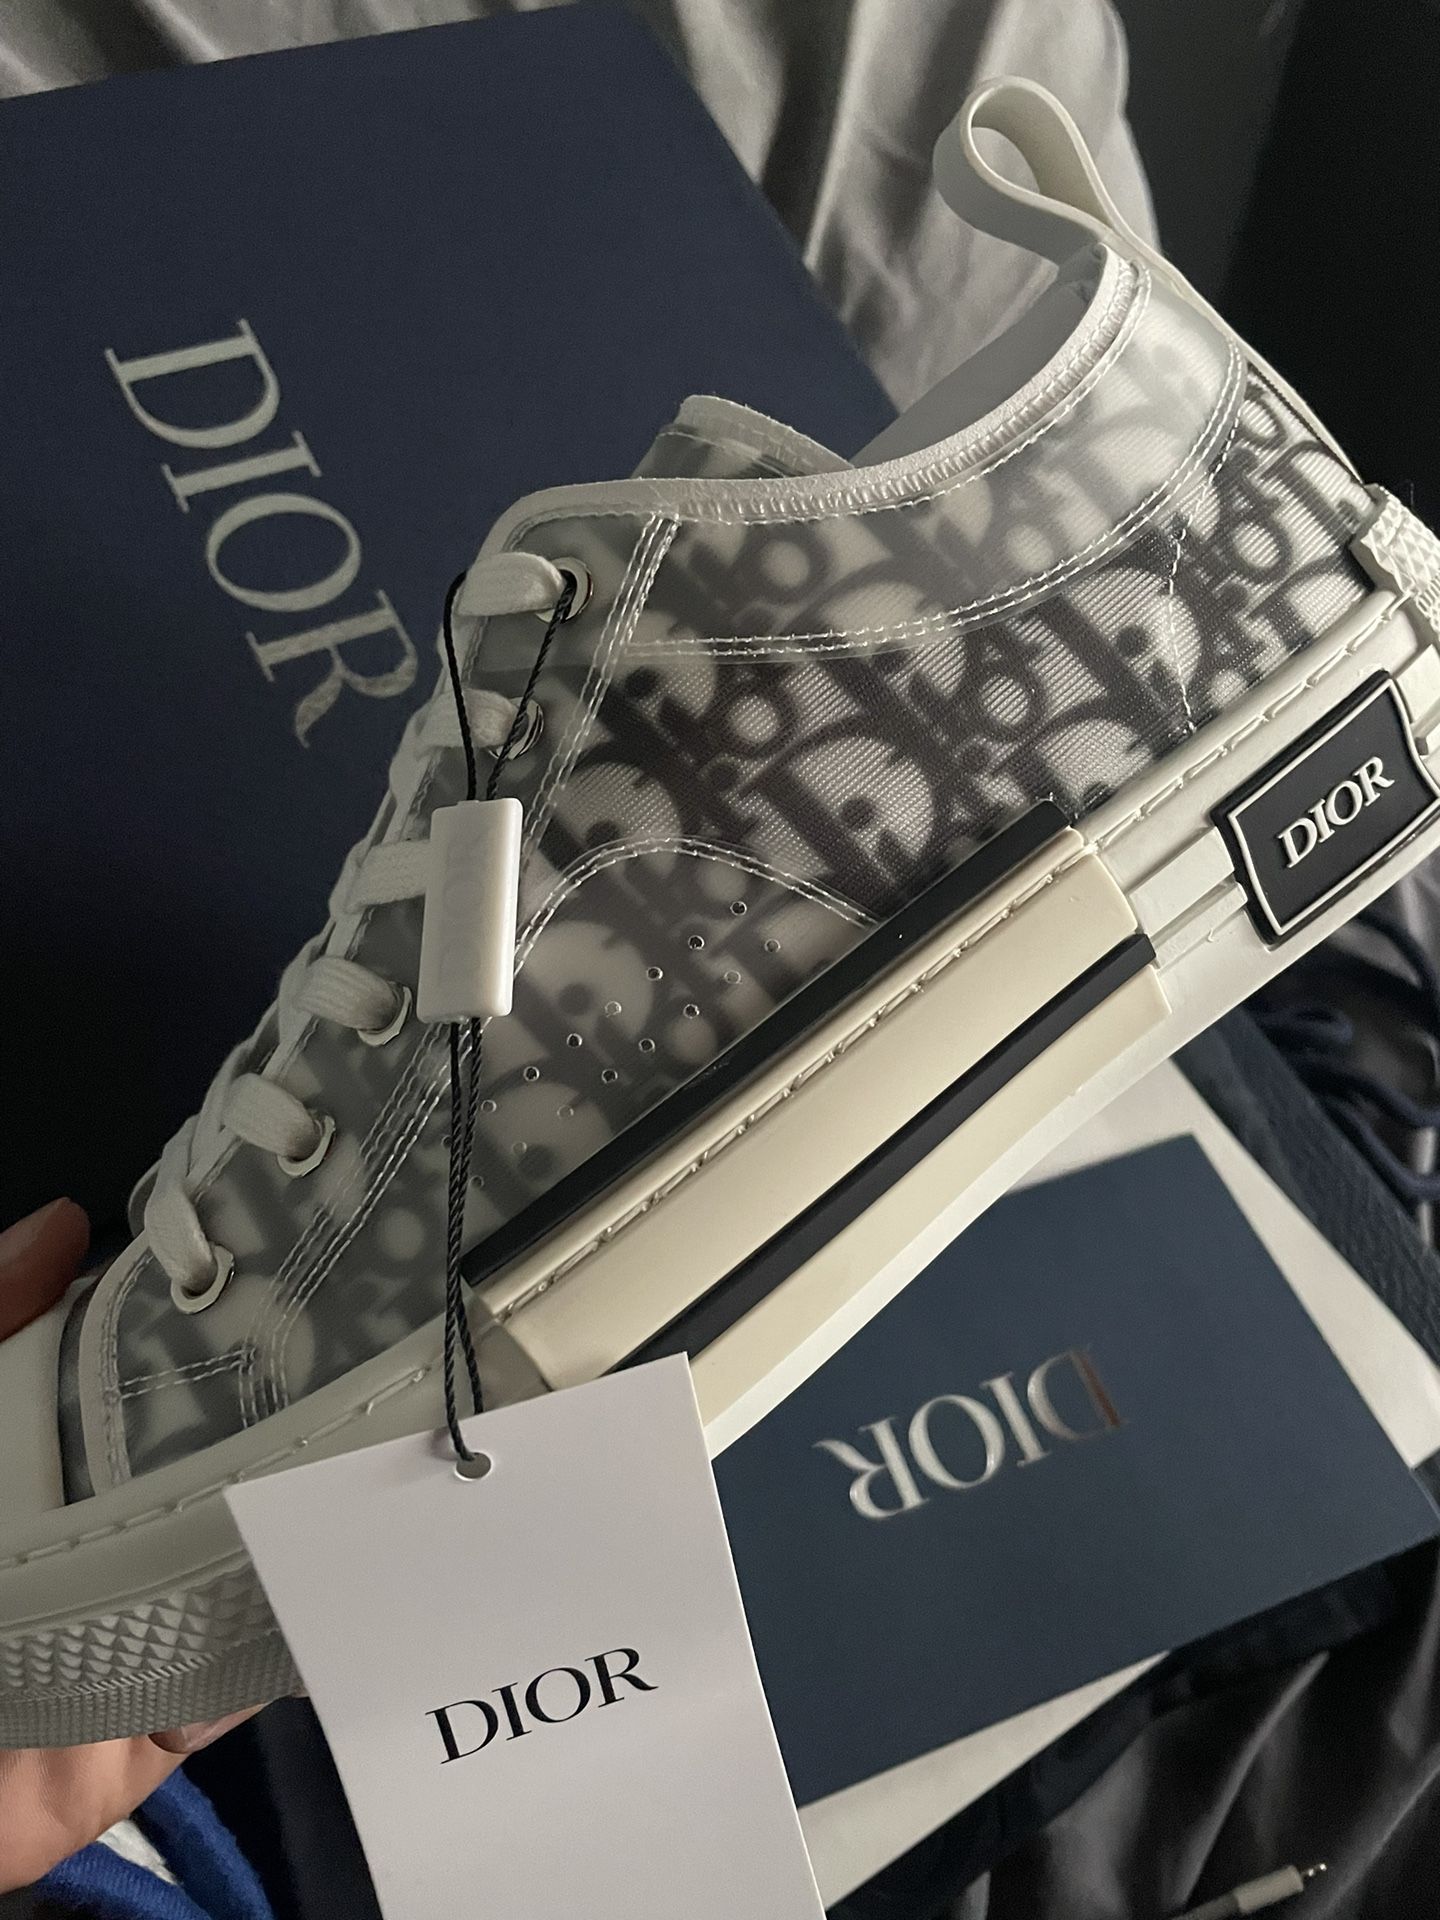 Dior shoes